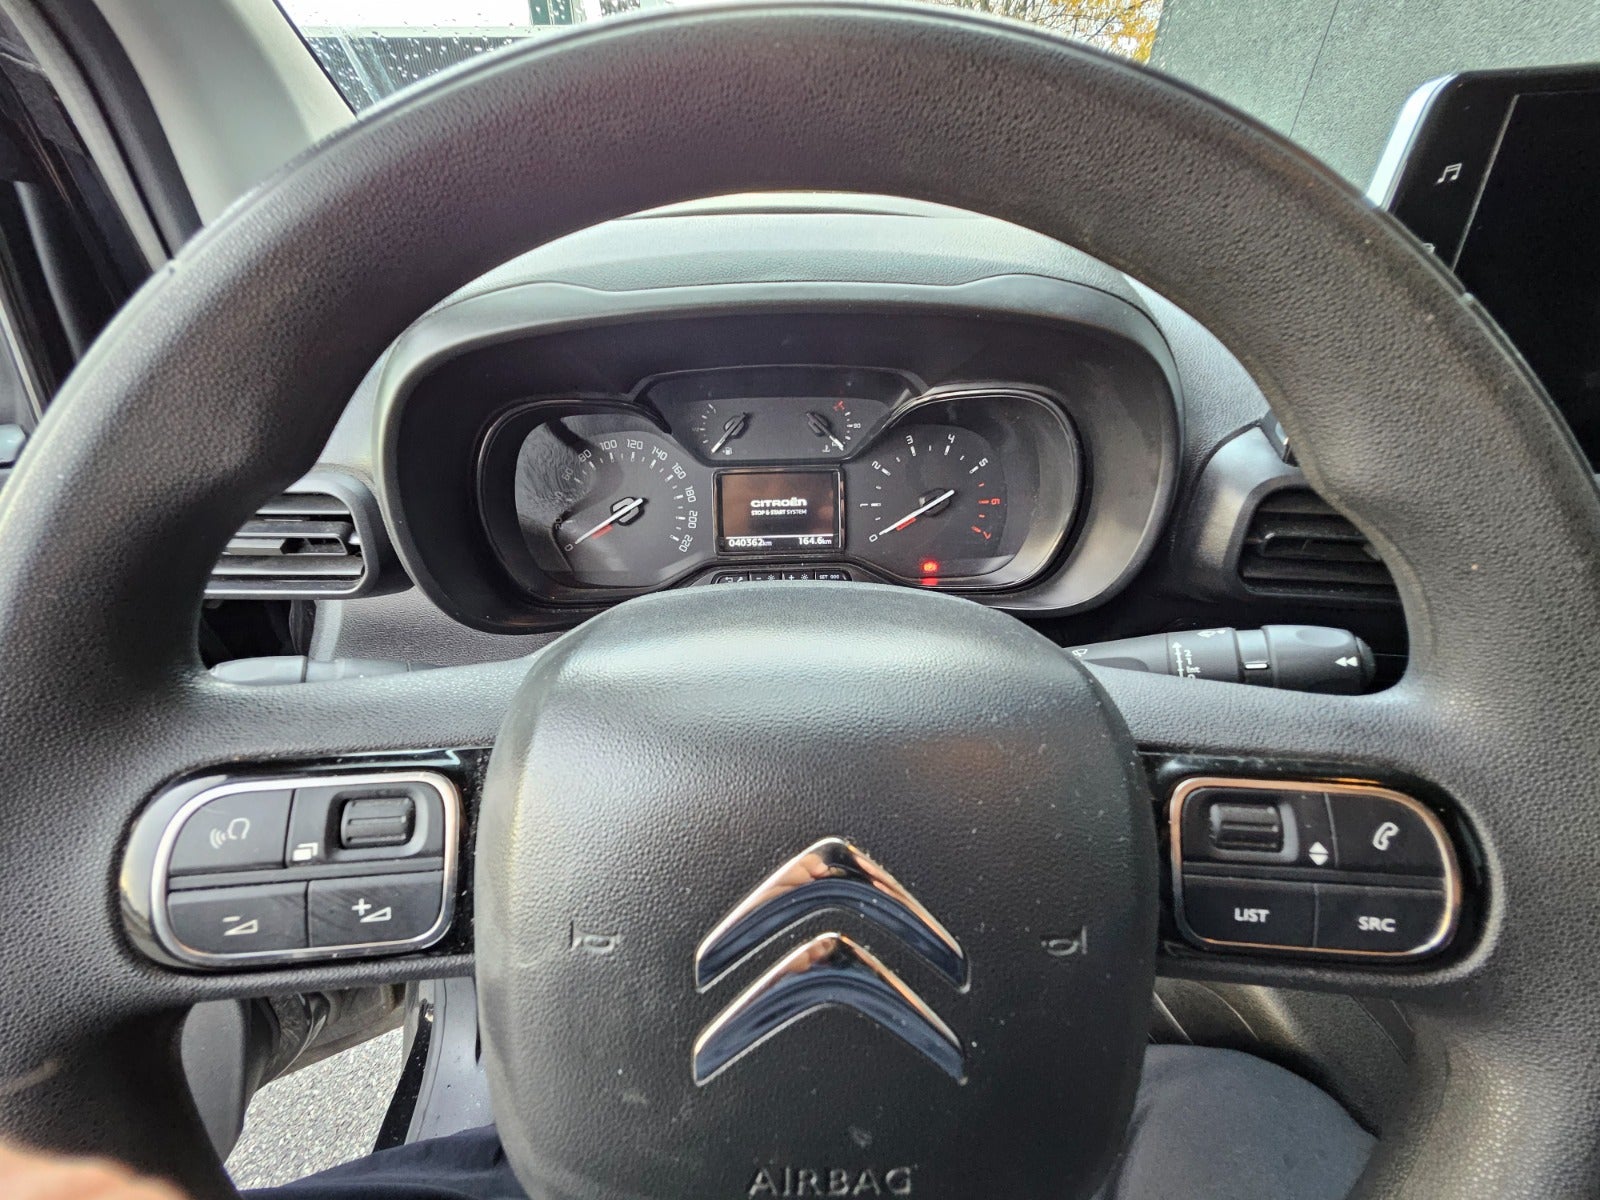 Citroën Berlingo 2020